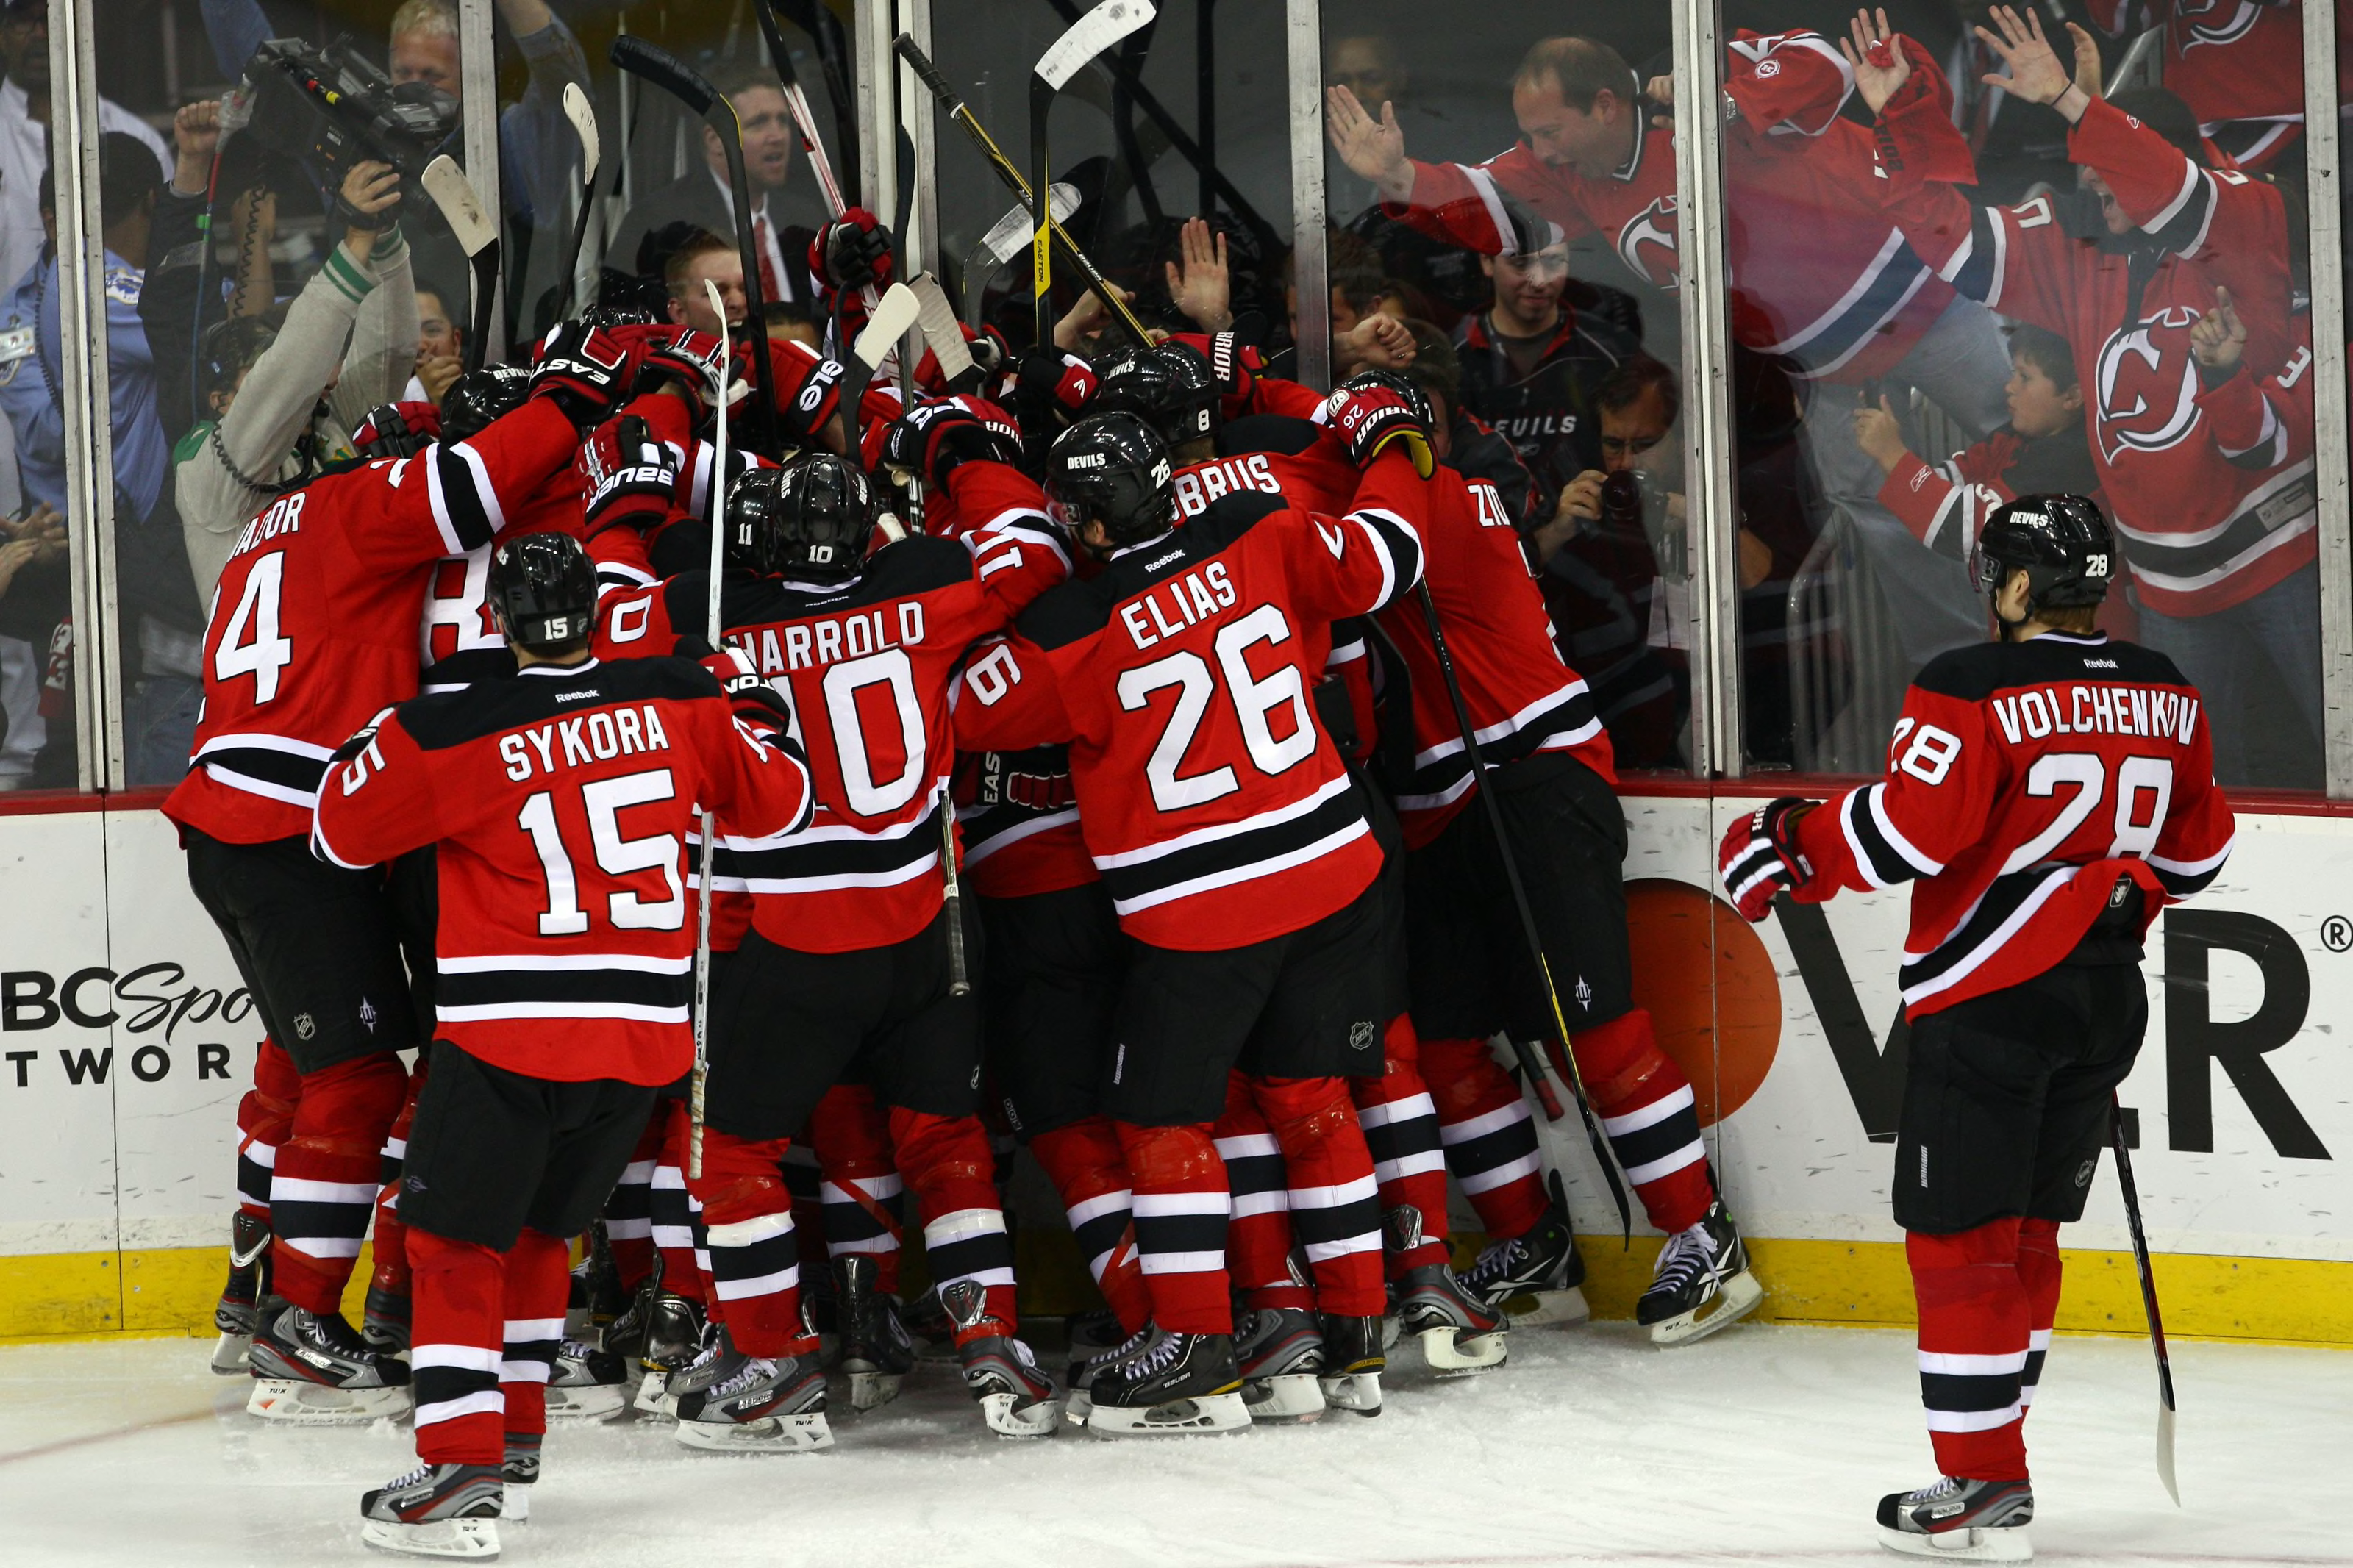 2012 NHL Playoffs, Rangers Vs. Devils: New Jersey Reaches Finals